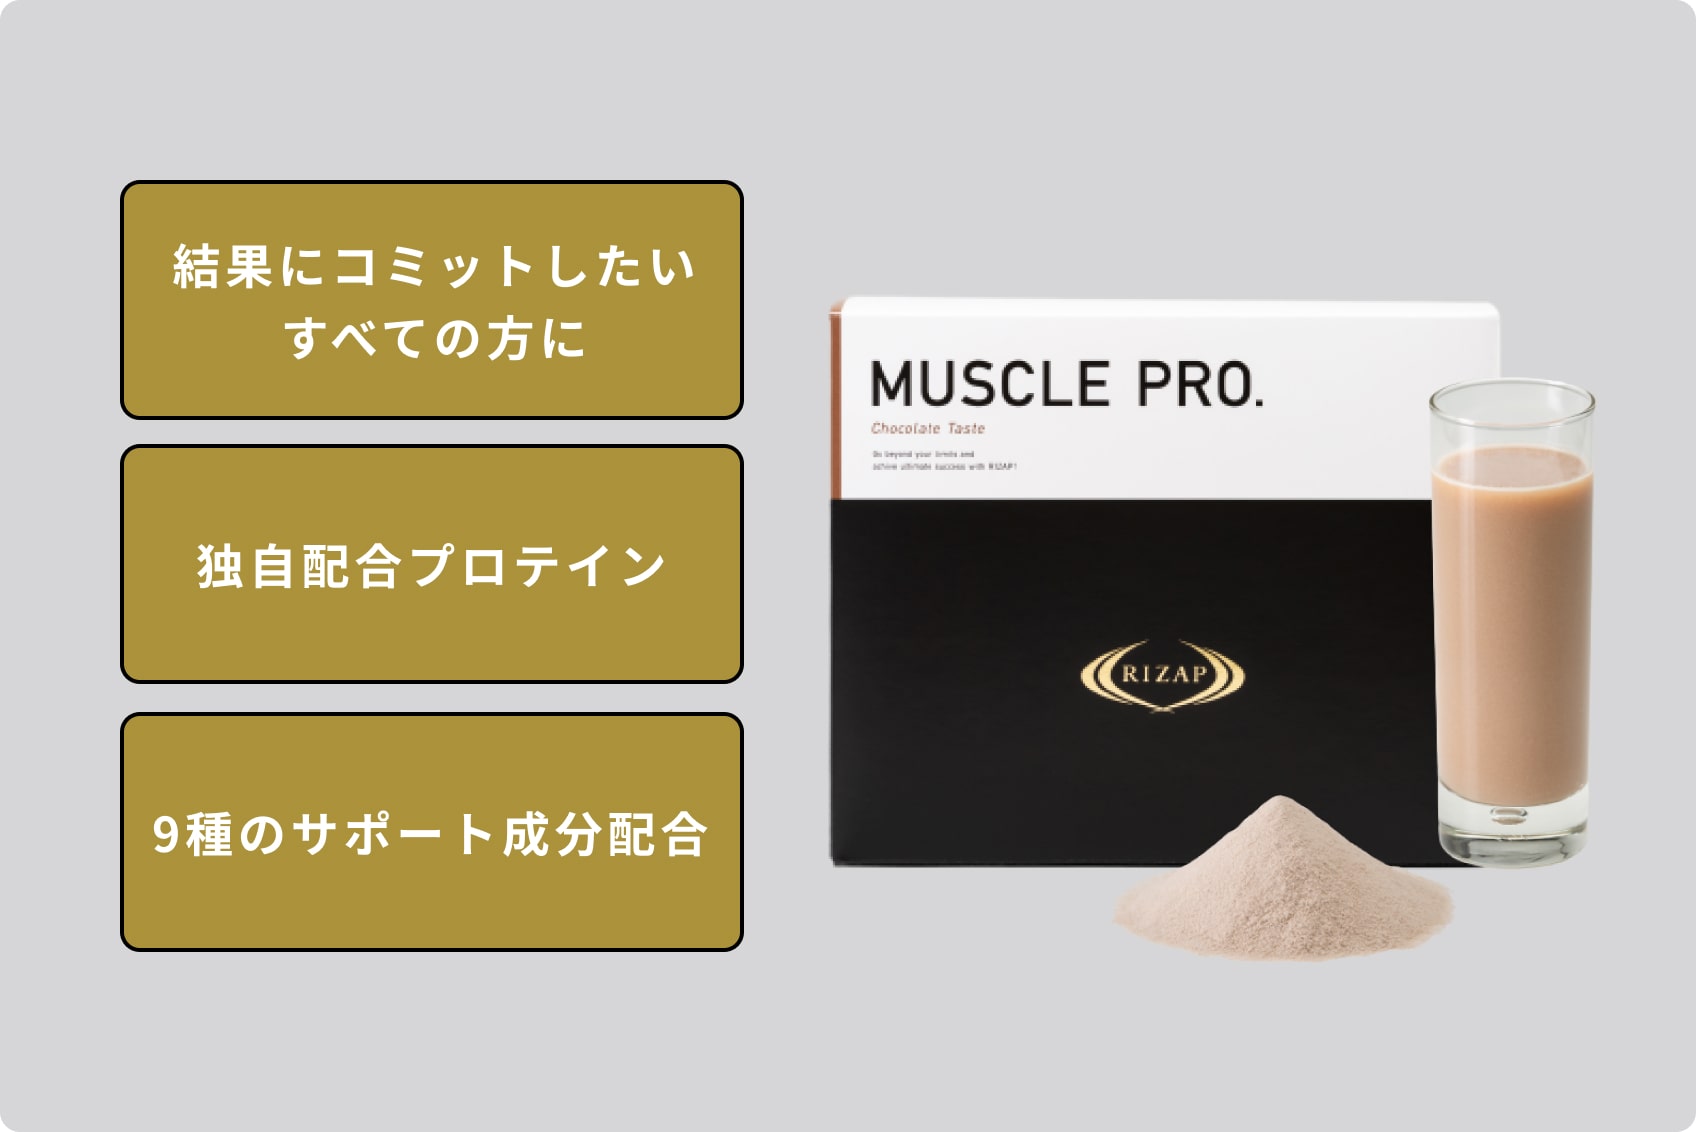 MUSCLE PRO.（チョコレート風味）